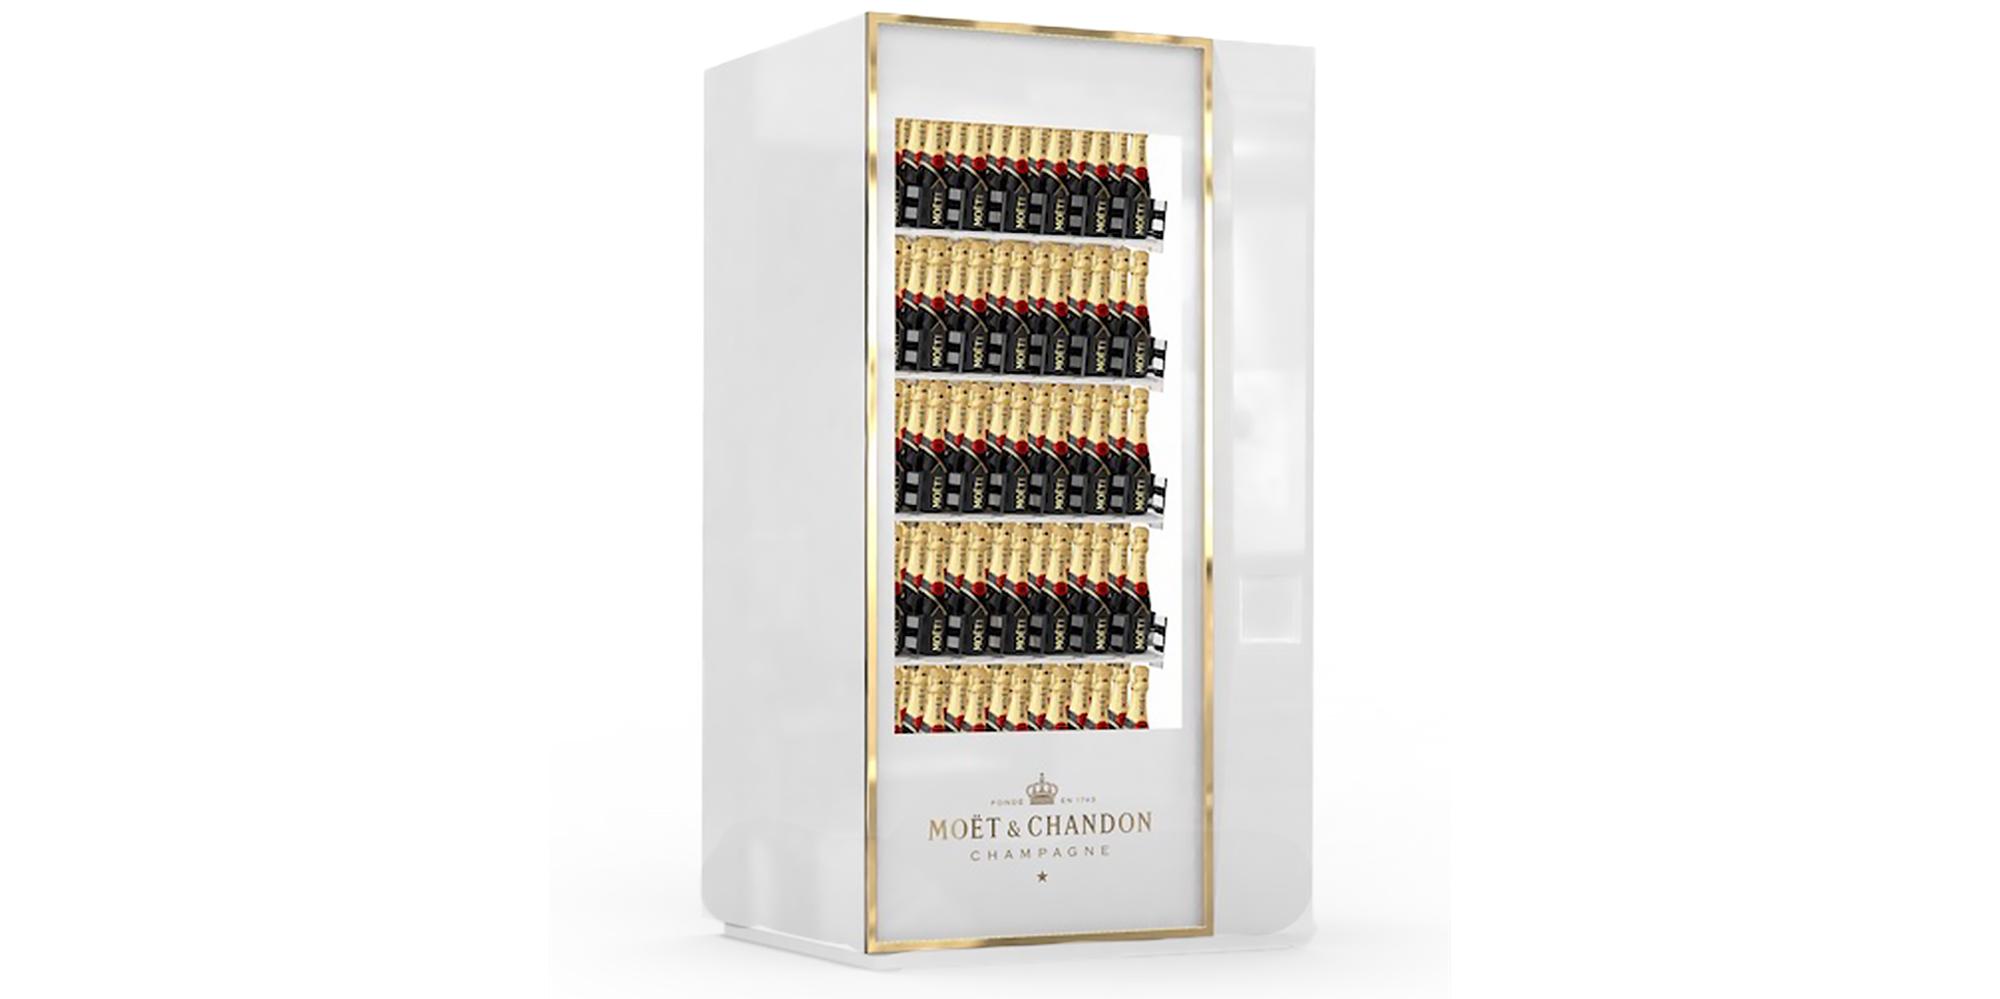 Moët & Chandon champagne vending machine